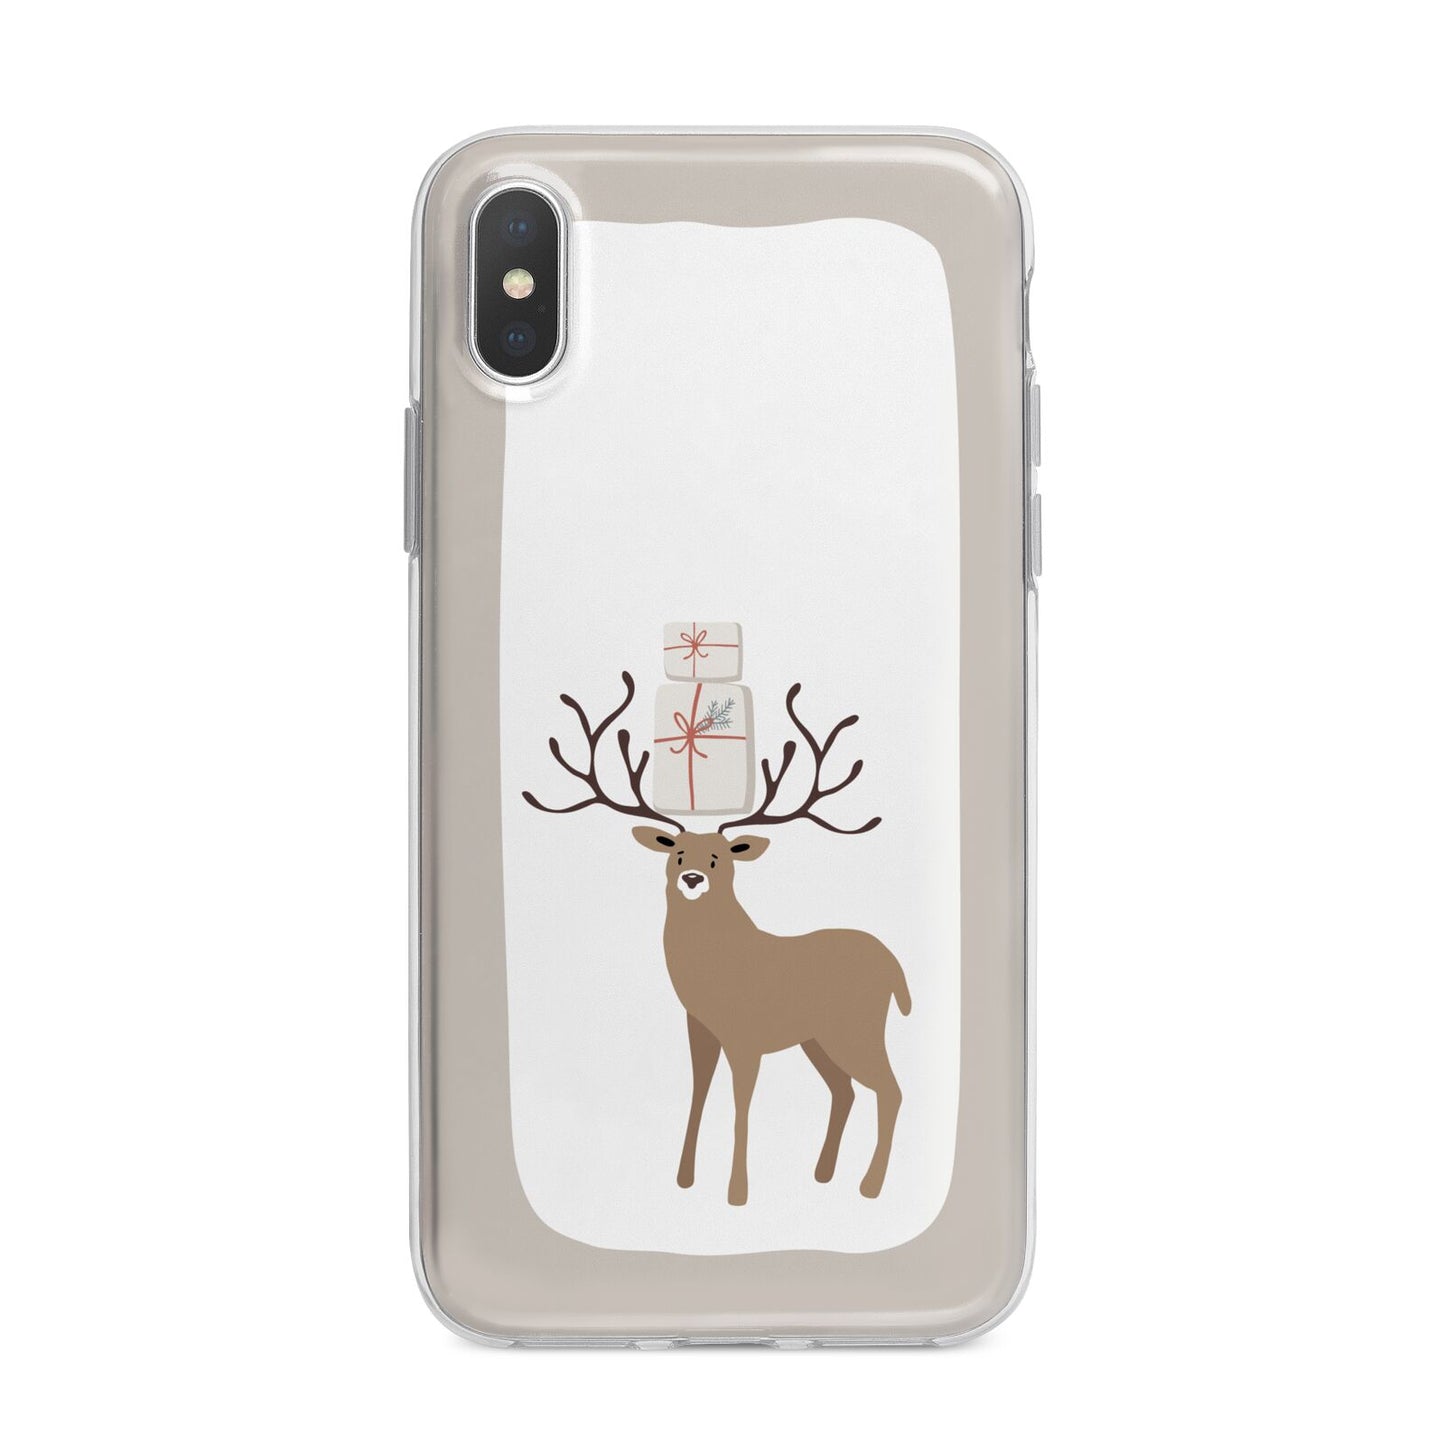 Reindeer Presents iPhone X Bumper Case on Silver iPhone Alternative Image 1